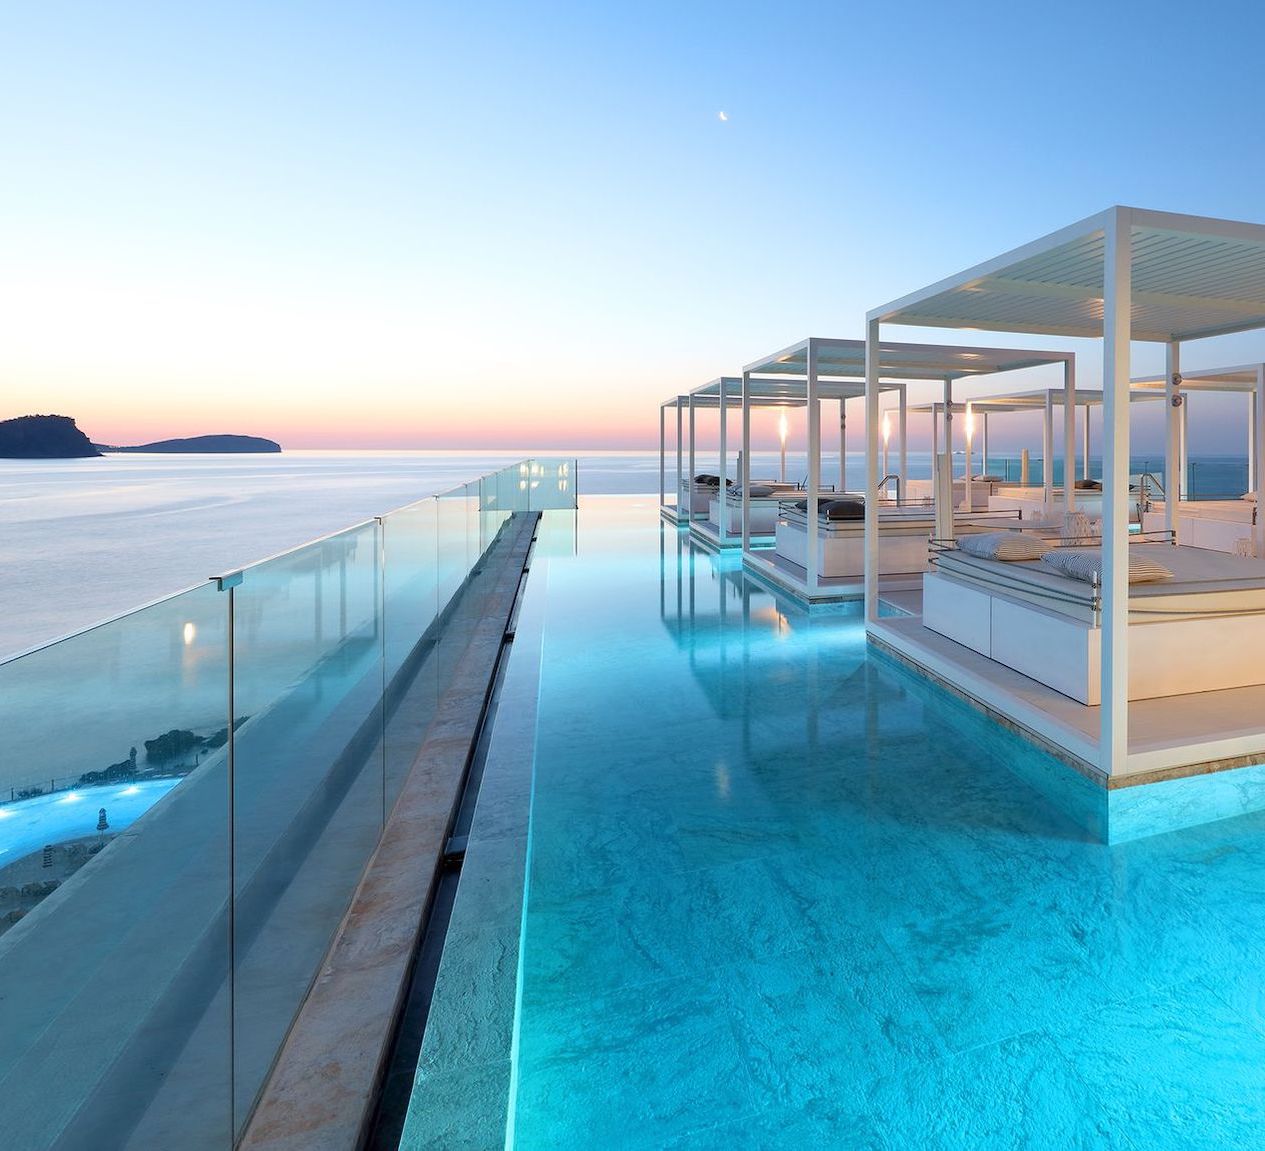 The Sensational Bless Hotel Ibiza: Where Island Life Meets Luxury